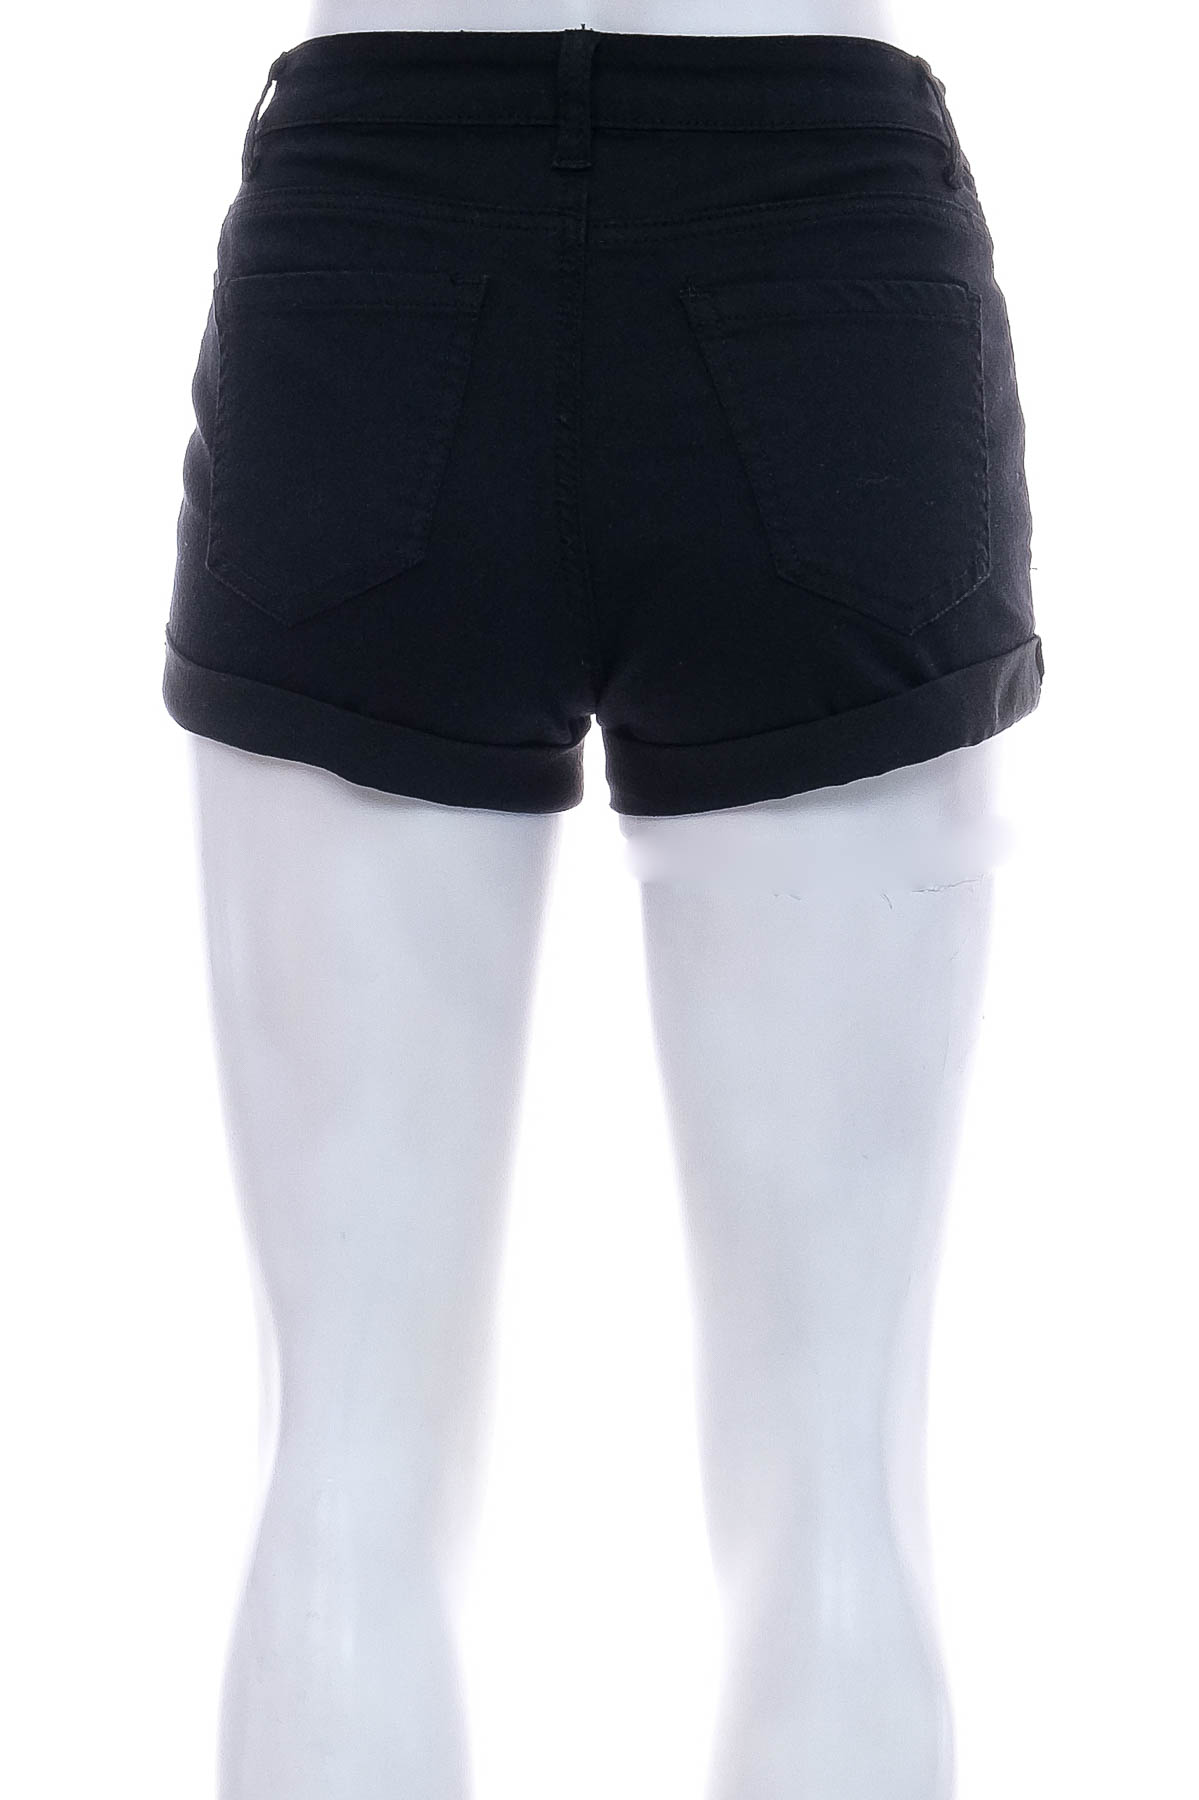 Female shorts - Valleygirl - 1